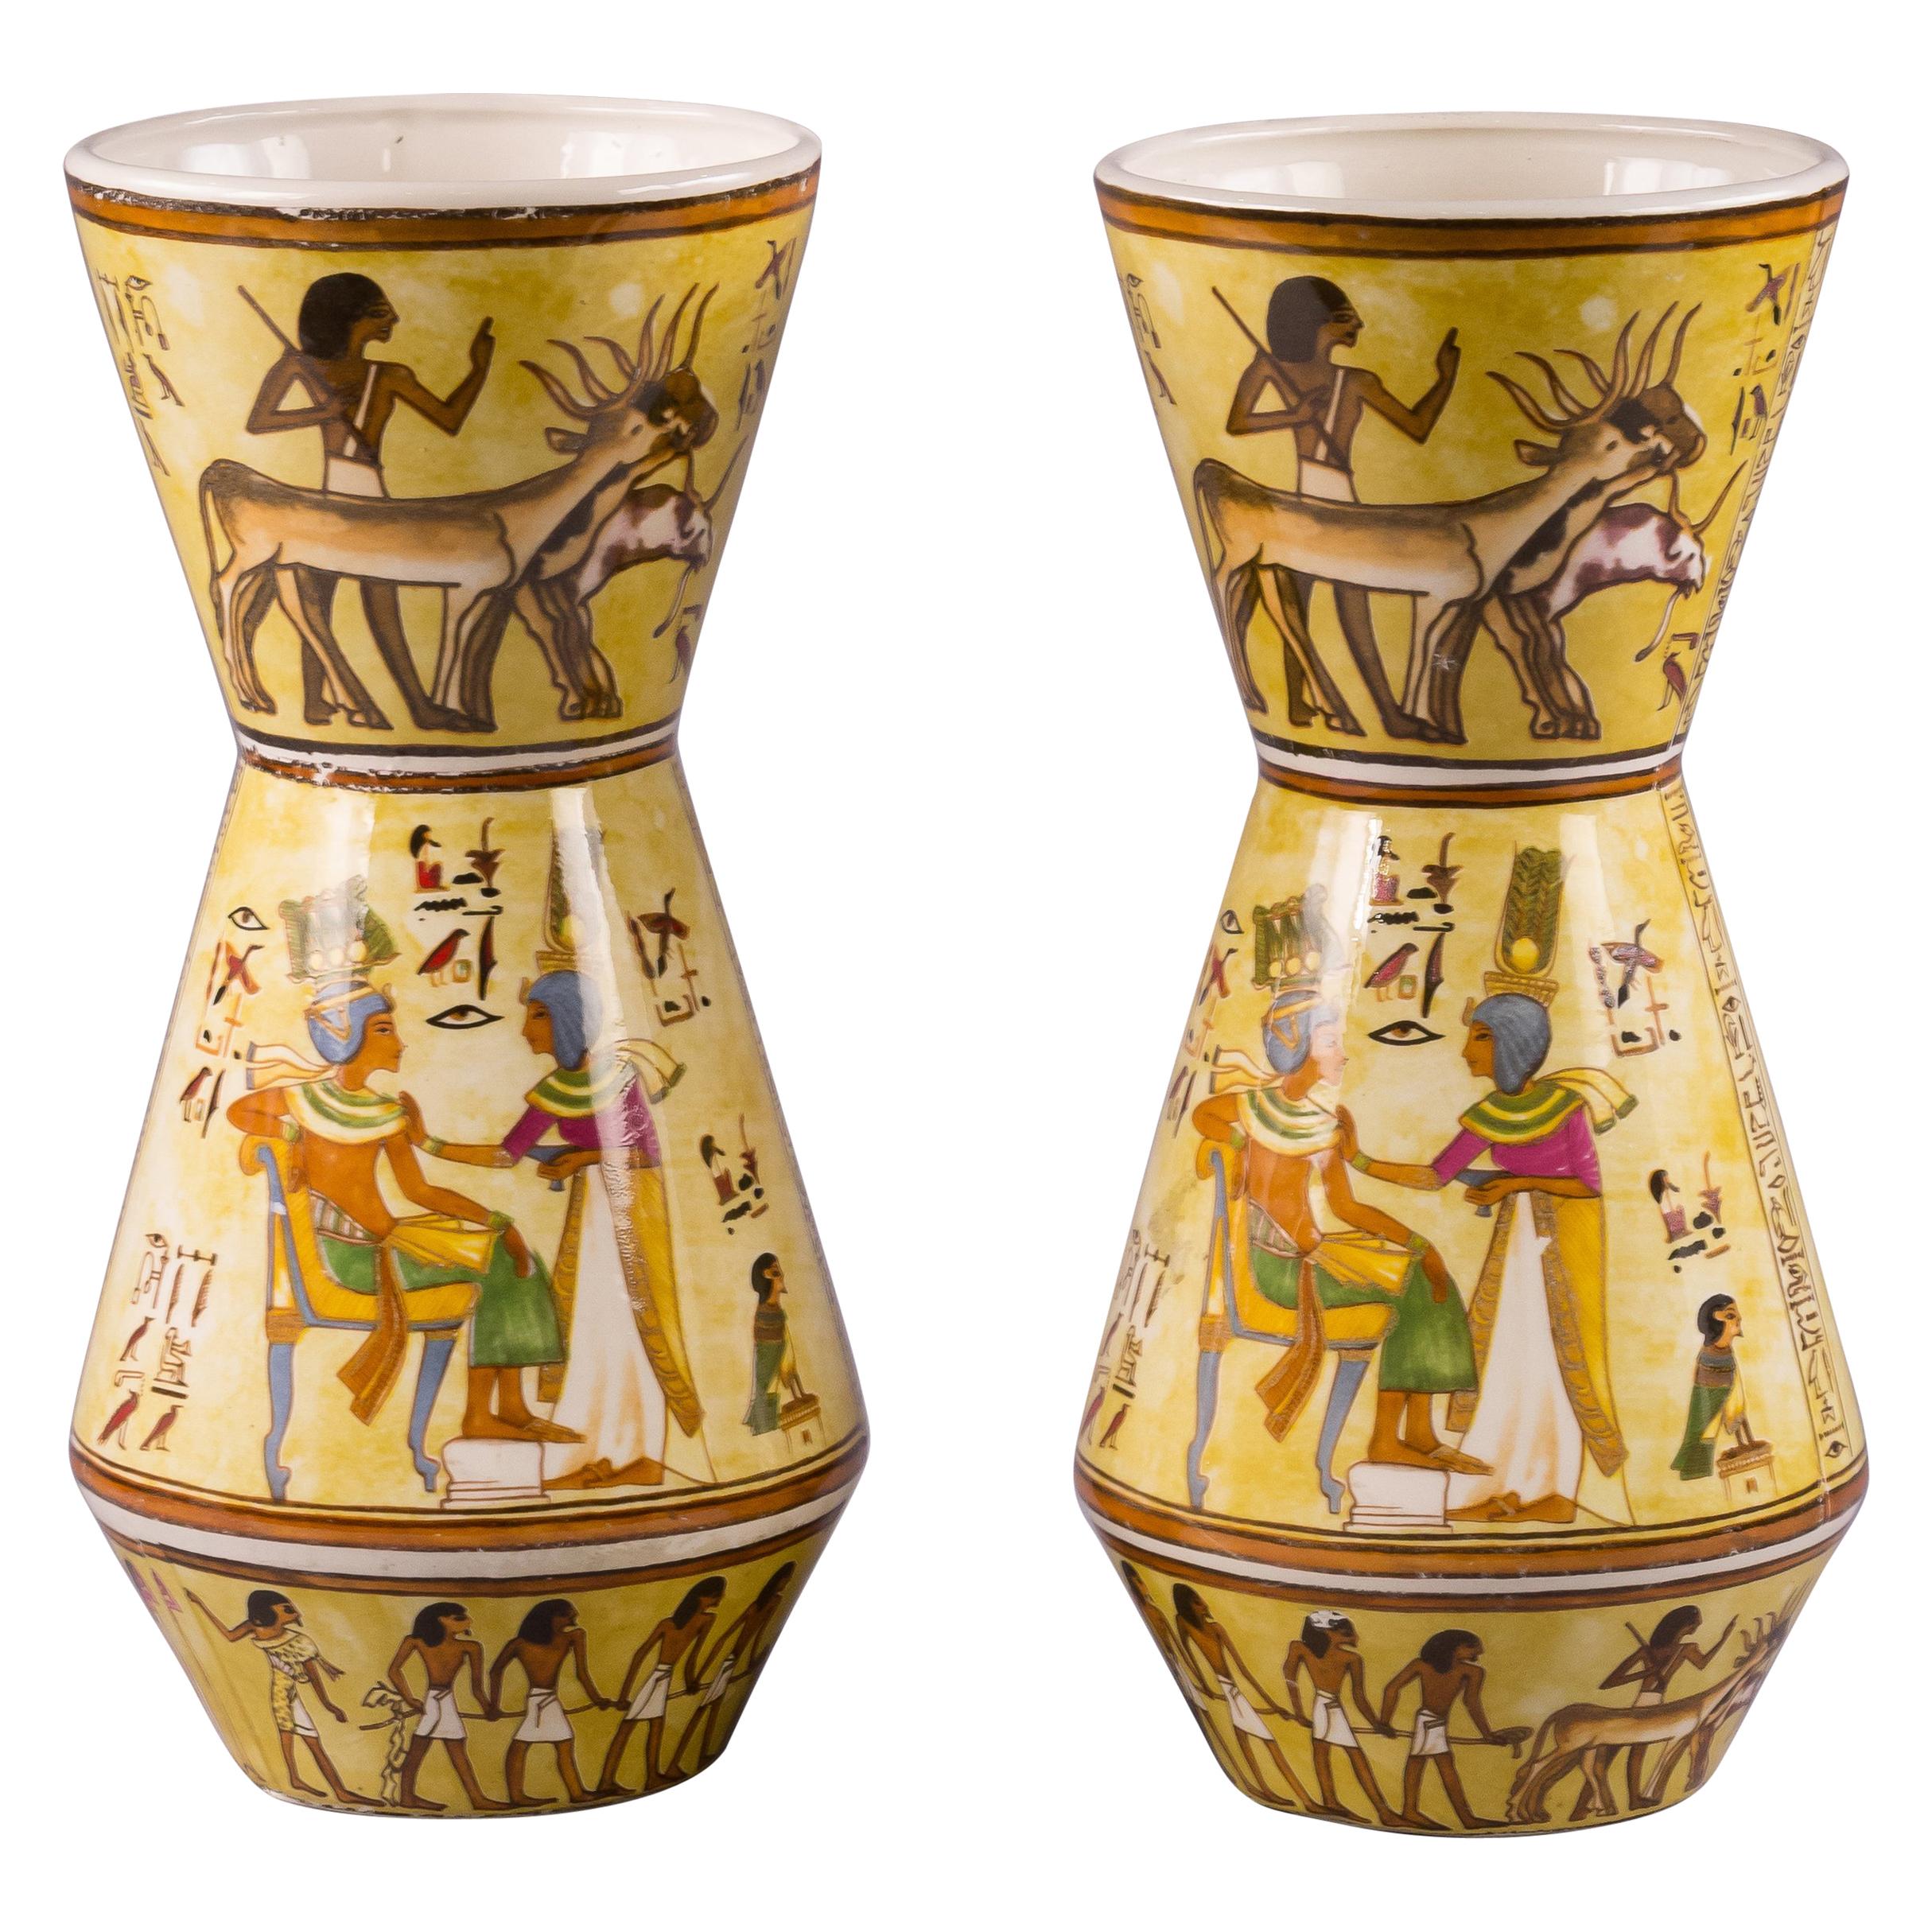 Pair of French Porcelain Egyptian Motif Vases, circa 1880